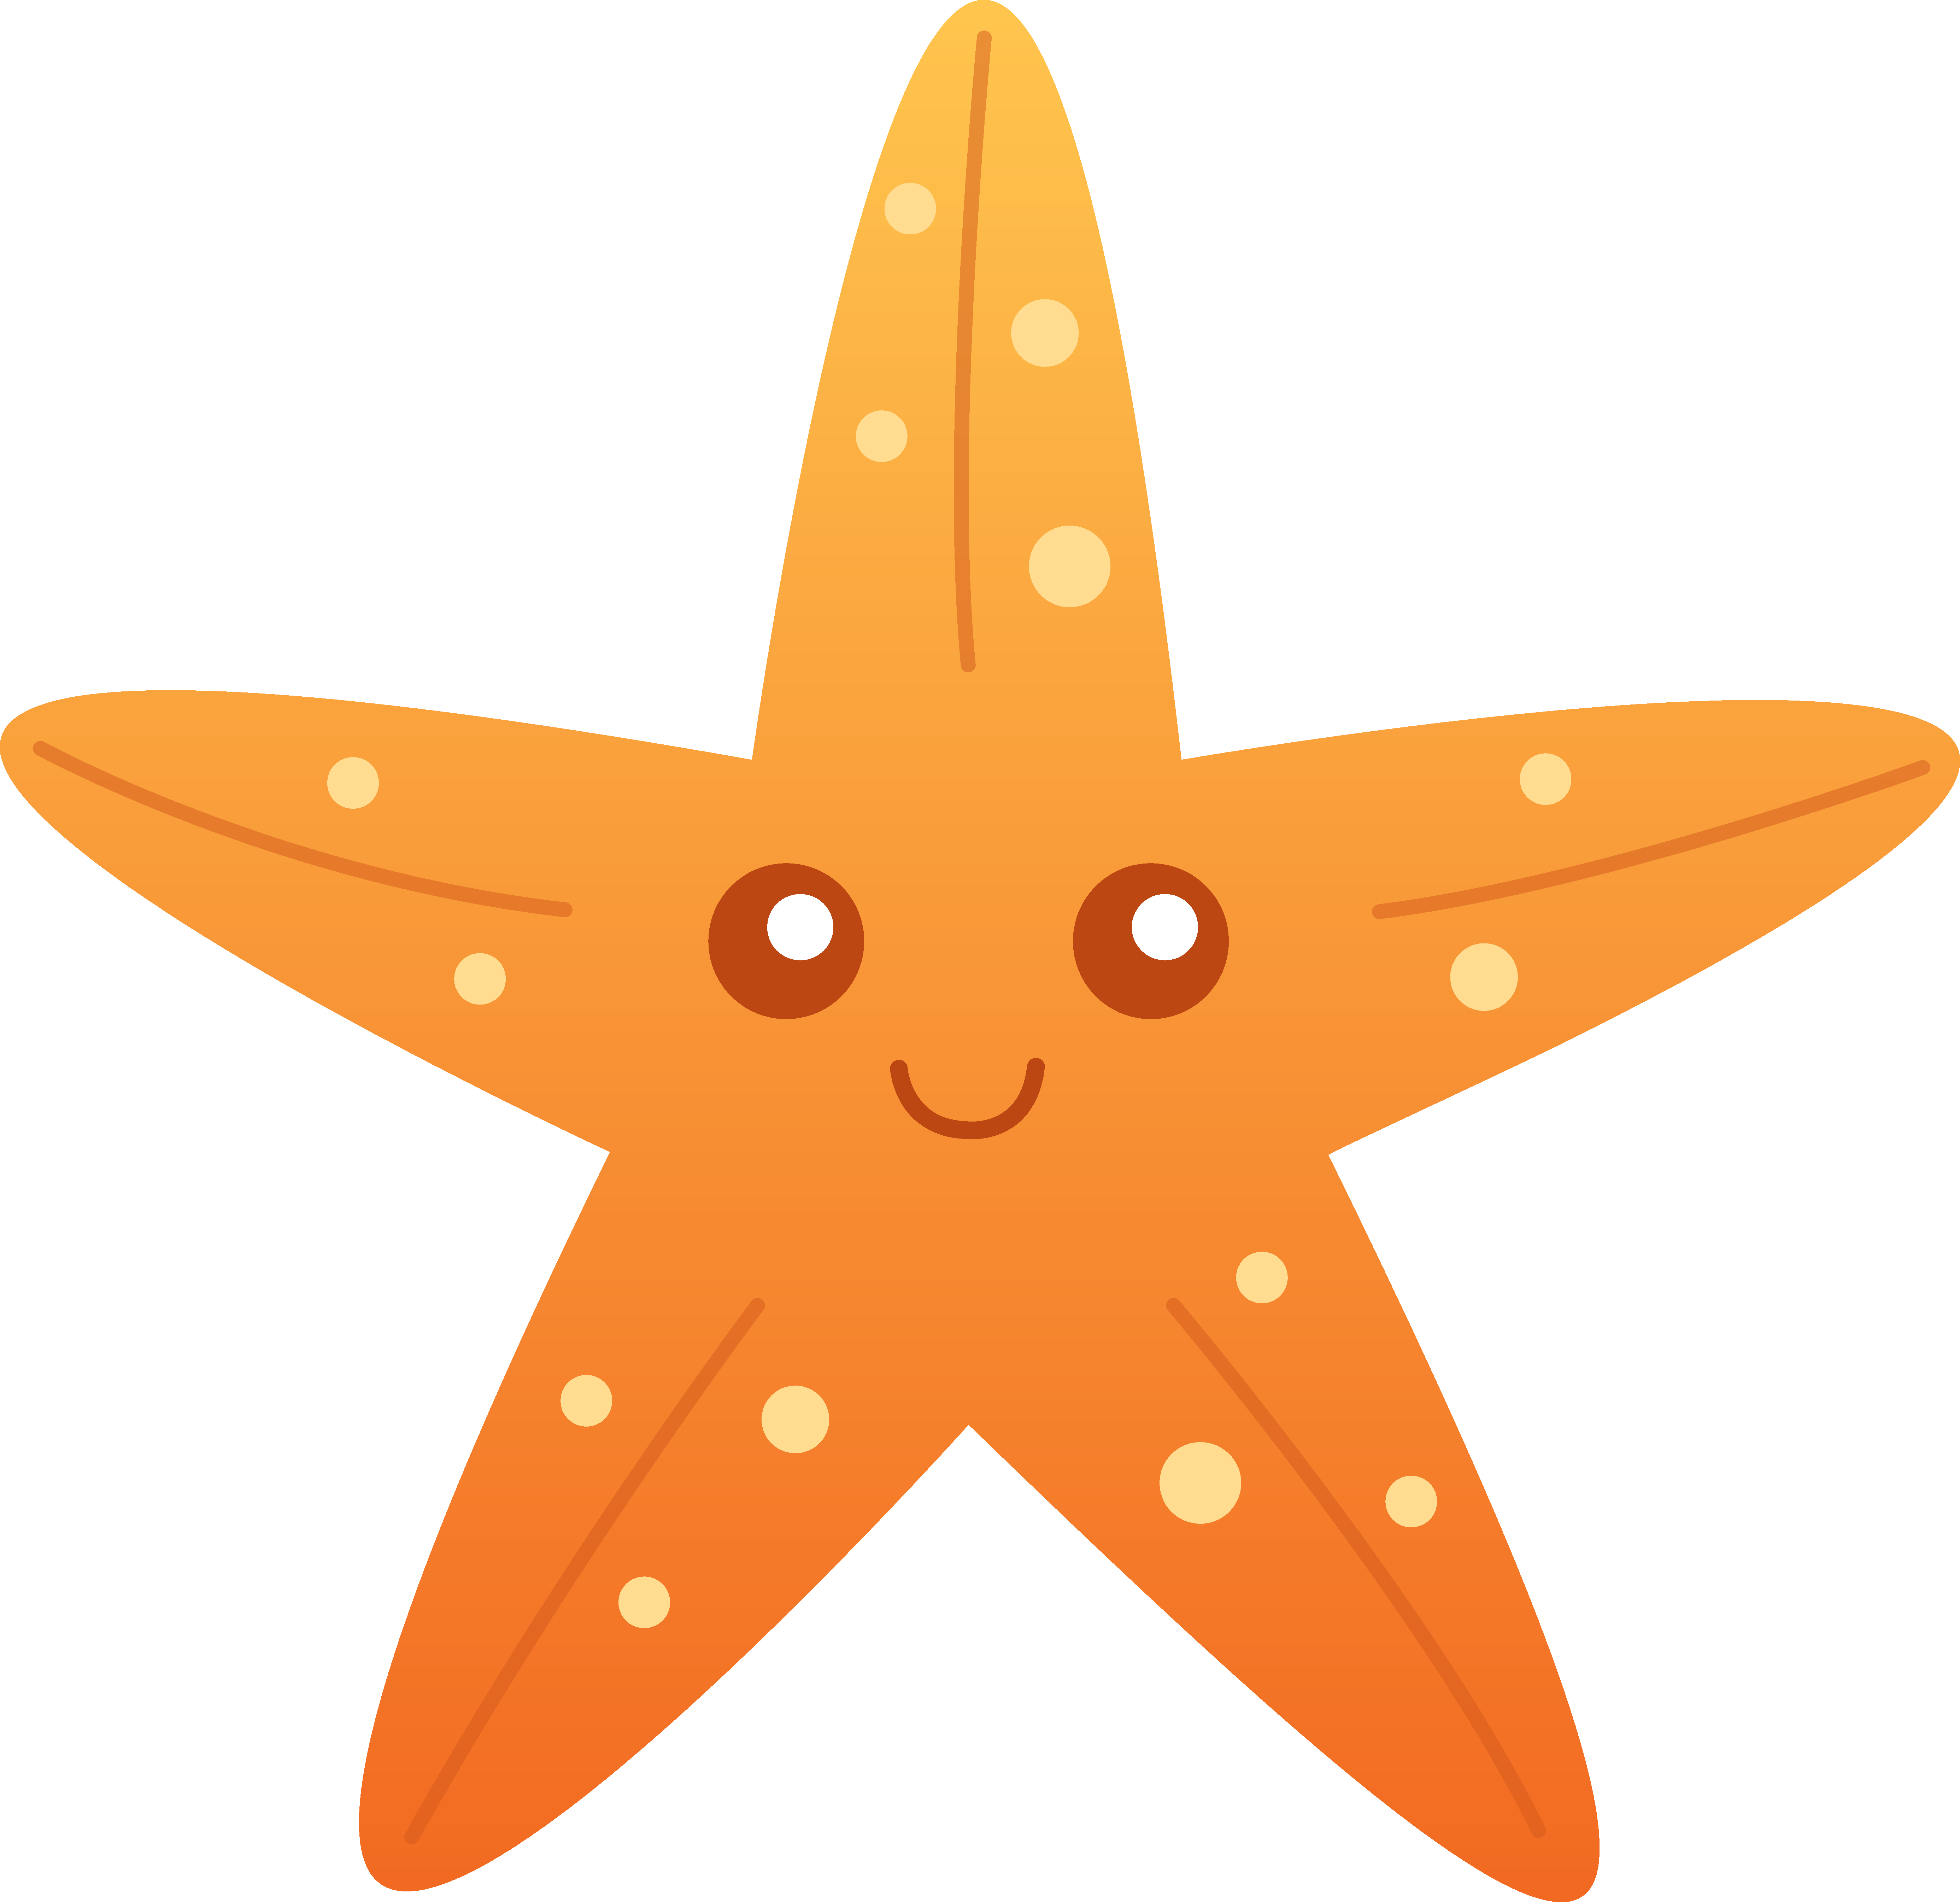 Animated starfish clipart